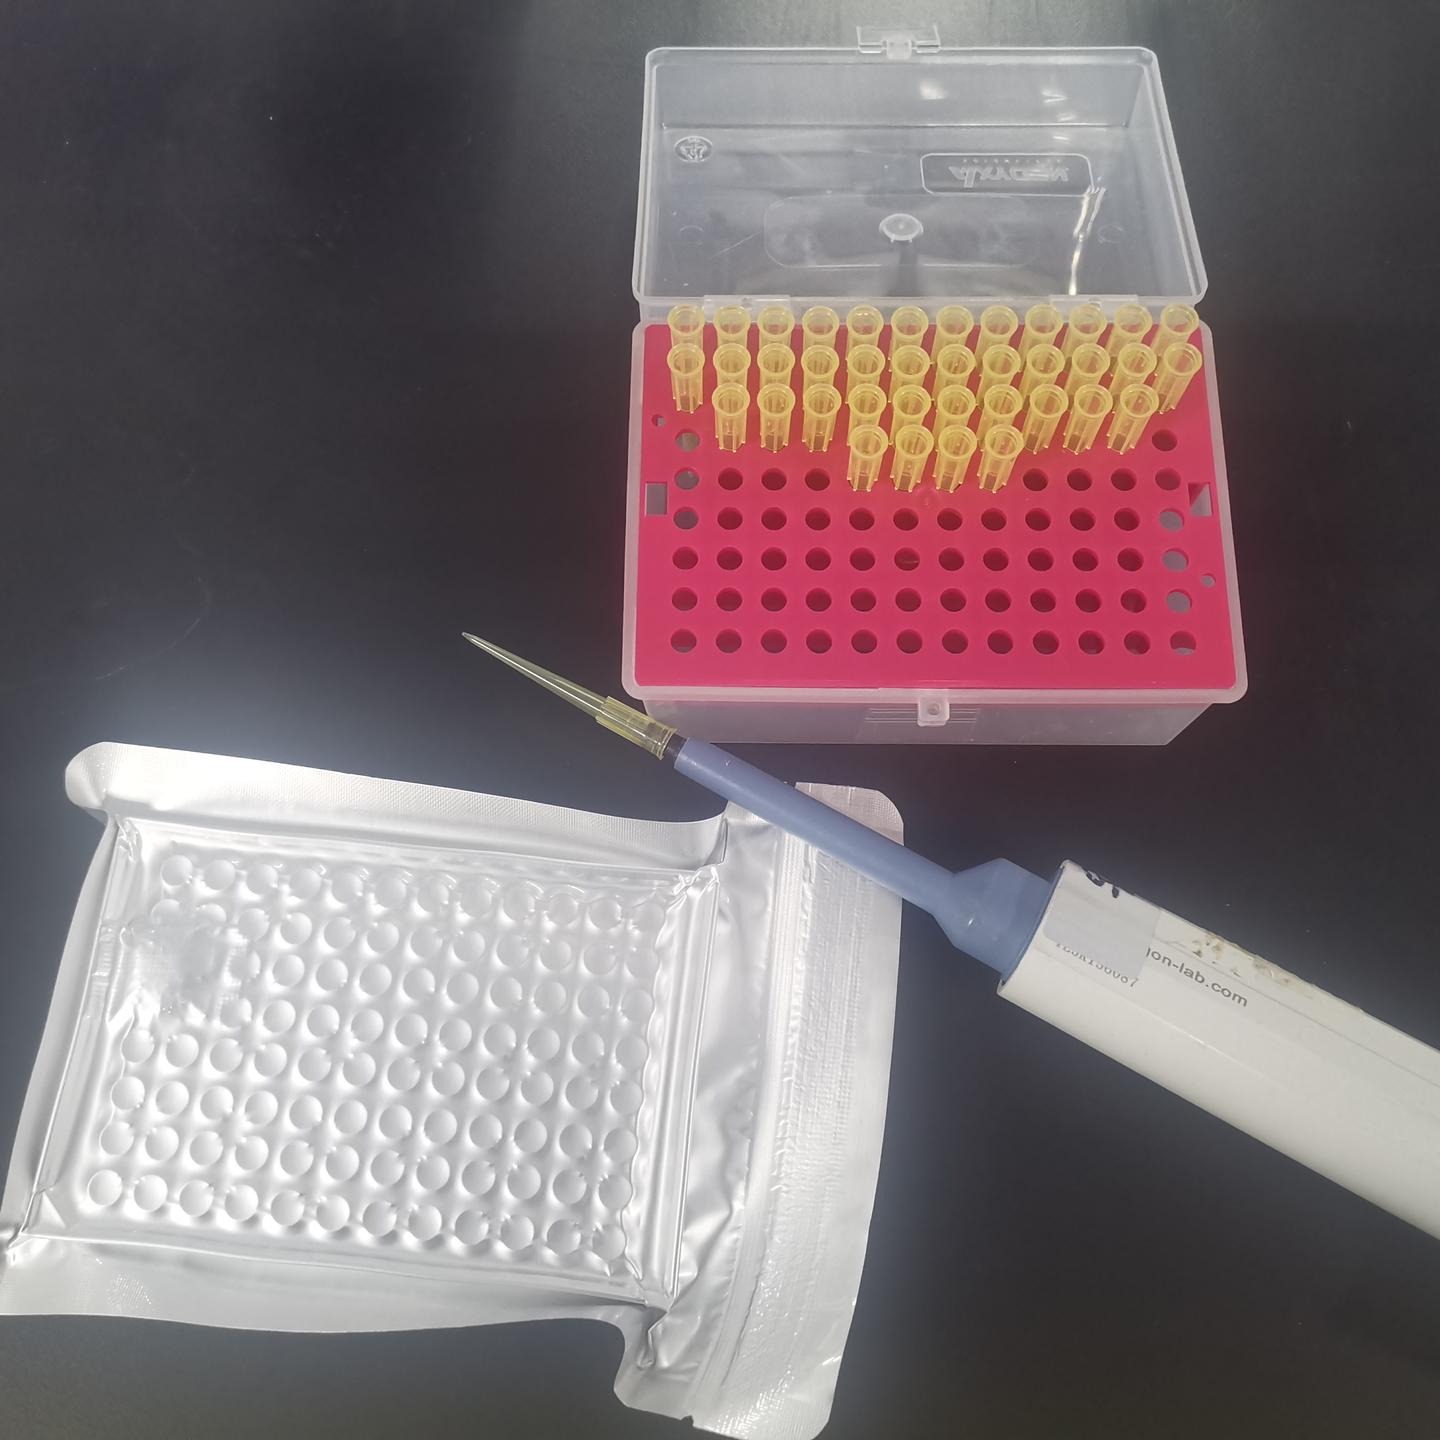 睿信生物 小鼠α1抗胰蛋白酶(α1-AT)elisa试剂盒图片